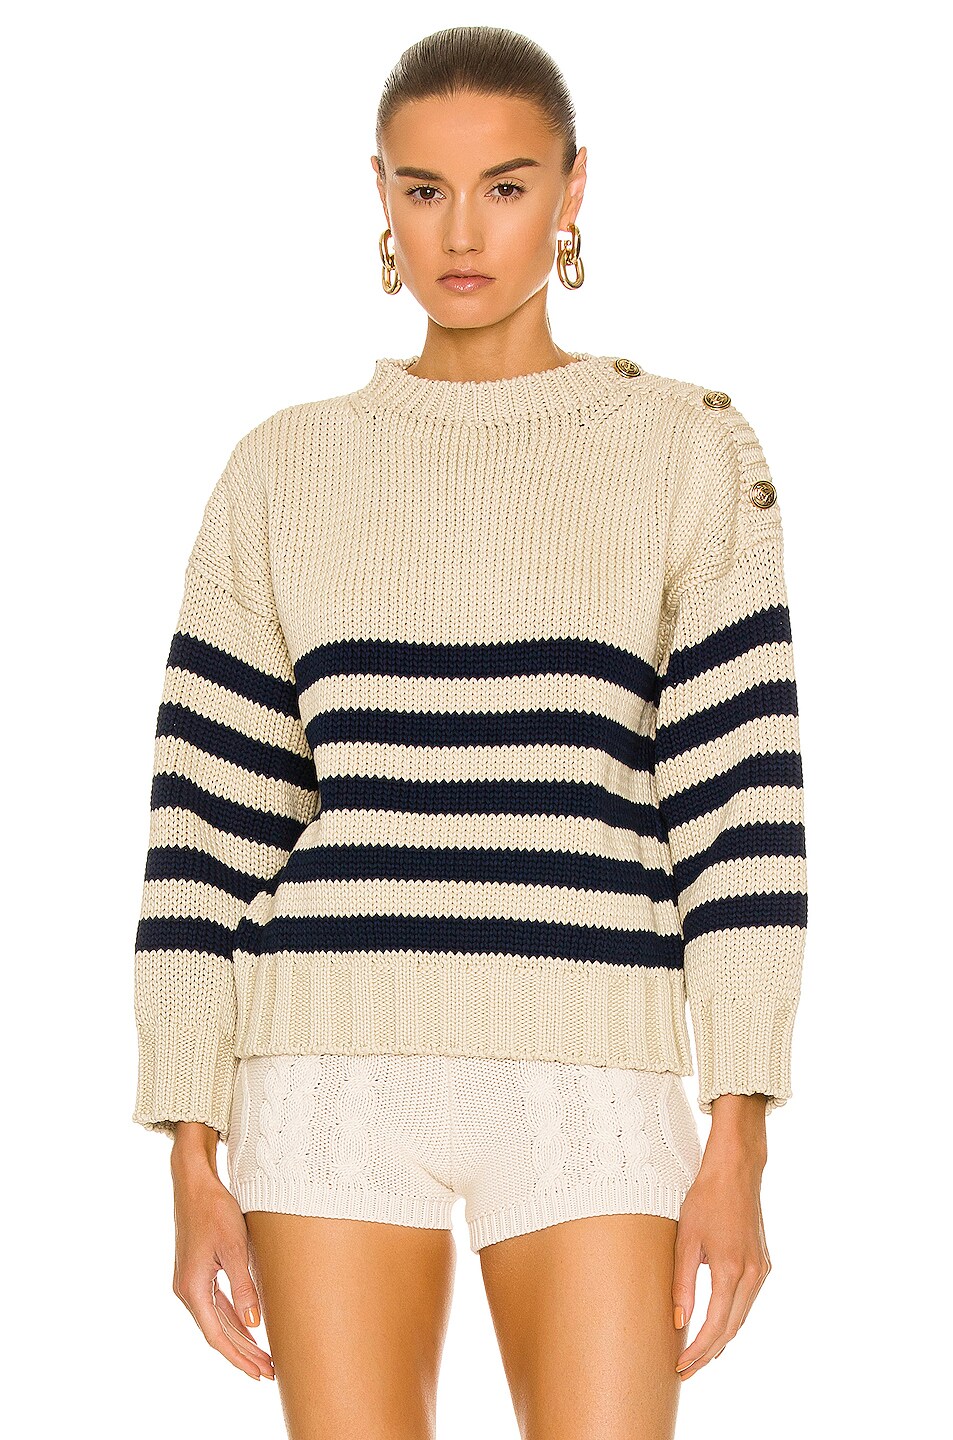 Rosie Assoulin Knit Marseille Sweater in Natural | FWRD